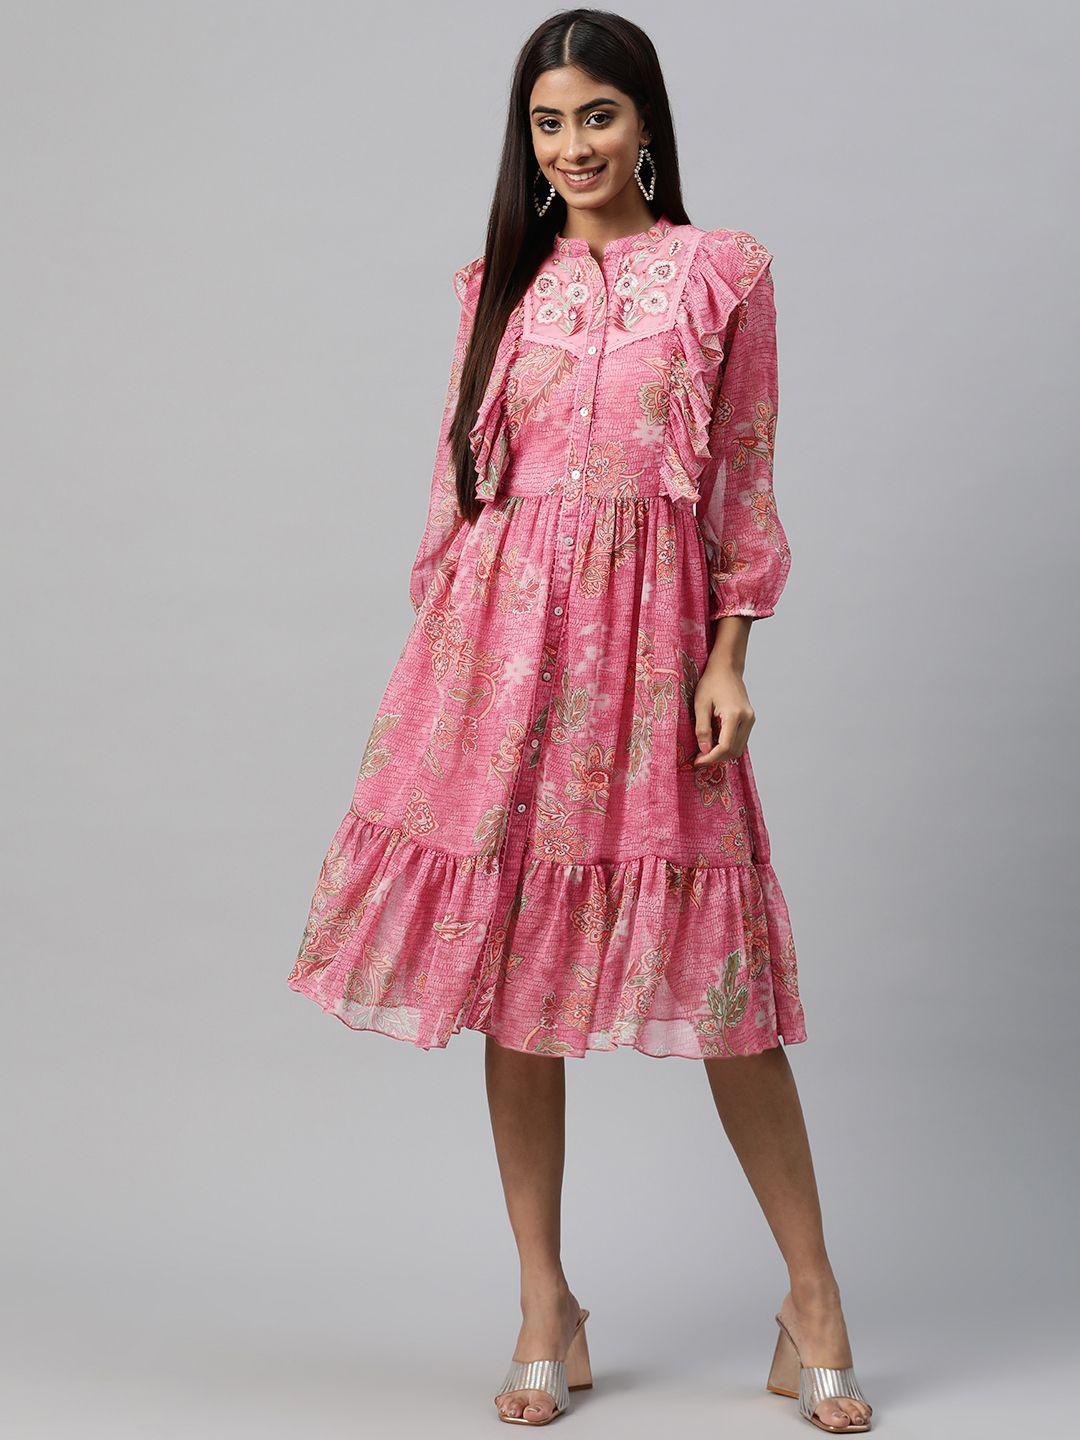 nayam by lakshita pink floral print puff sleeve chiffon fit & flare dress